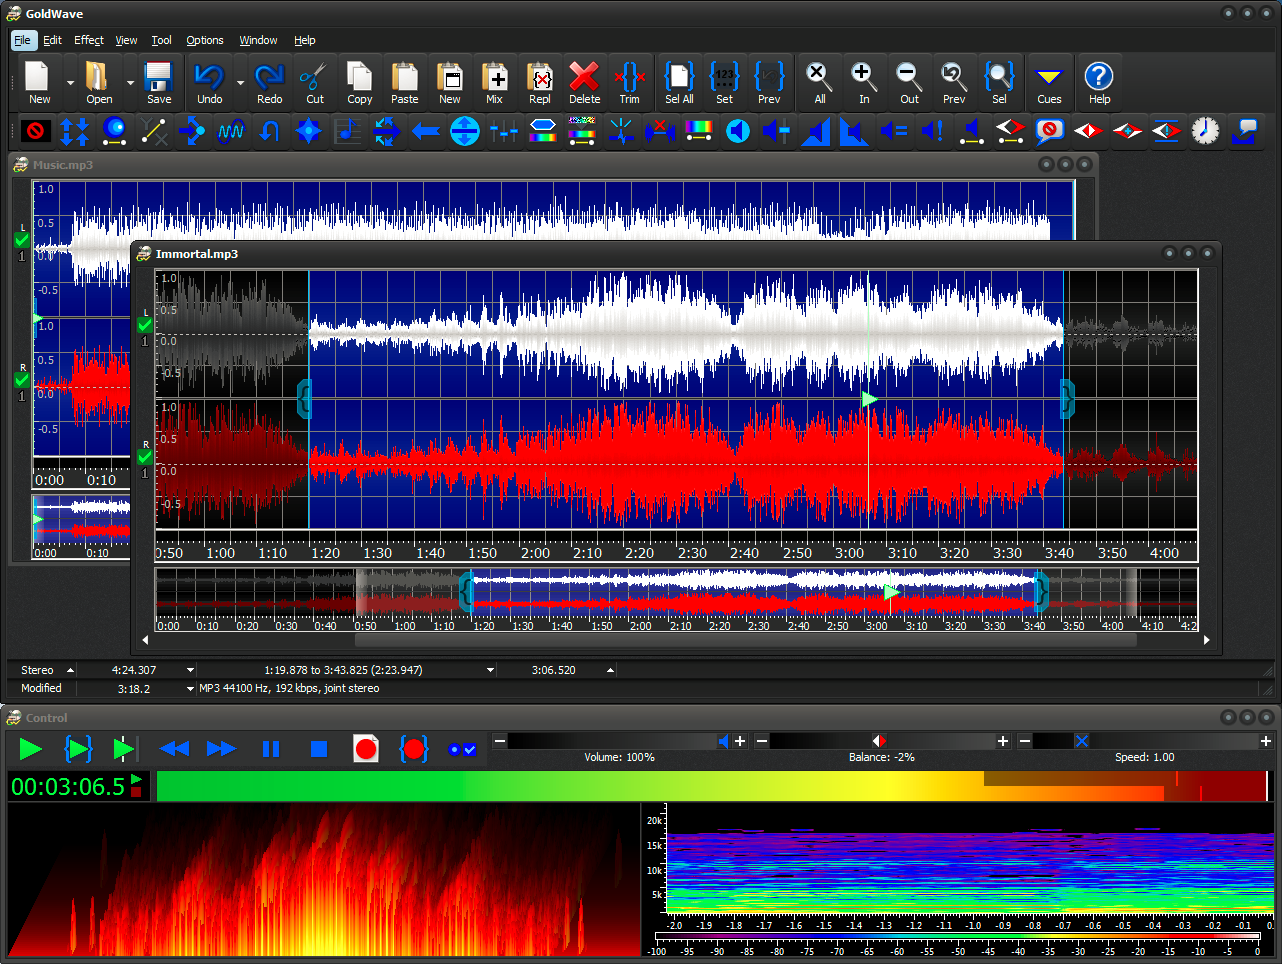 goldwave是一个集声音编辑,播放,录制和转换的音频处理工具,支持对wav